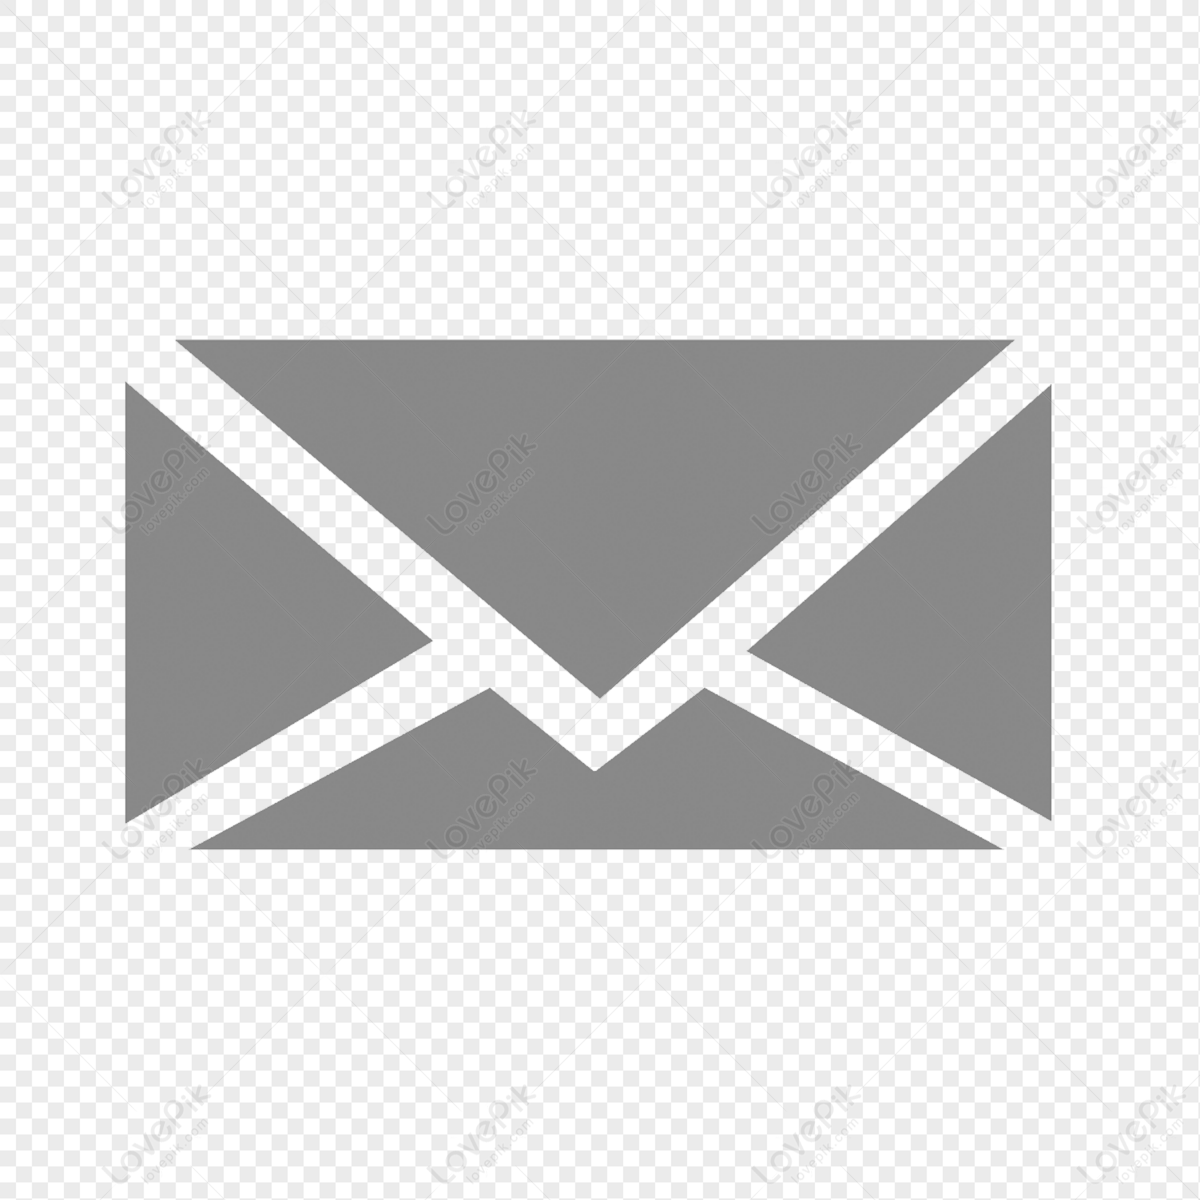 Enveloppe - Icônes multimédia gratuites